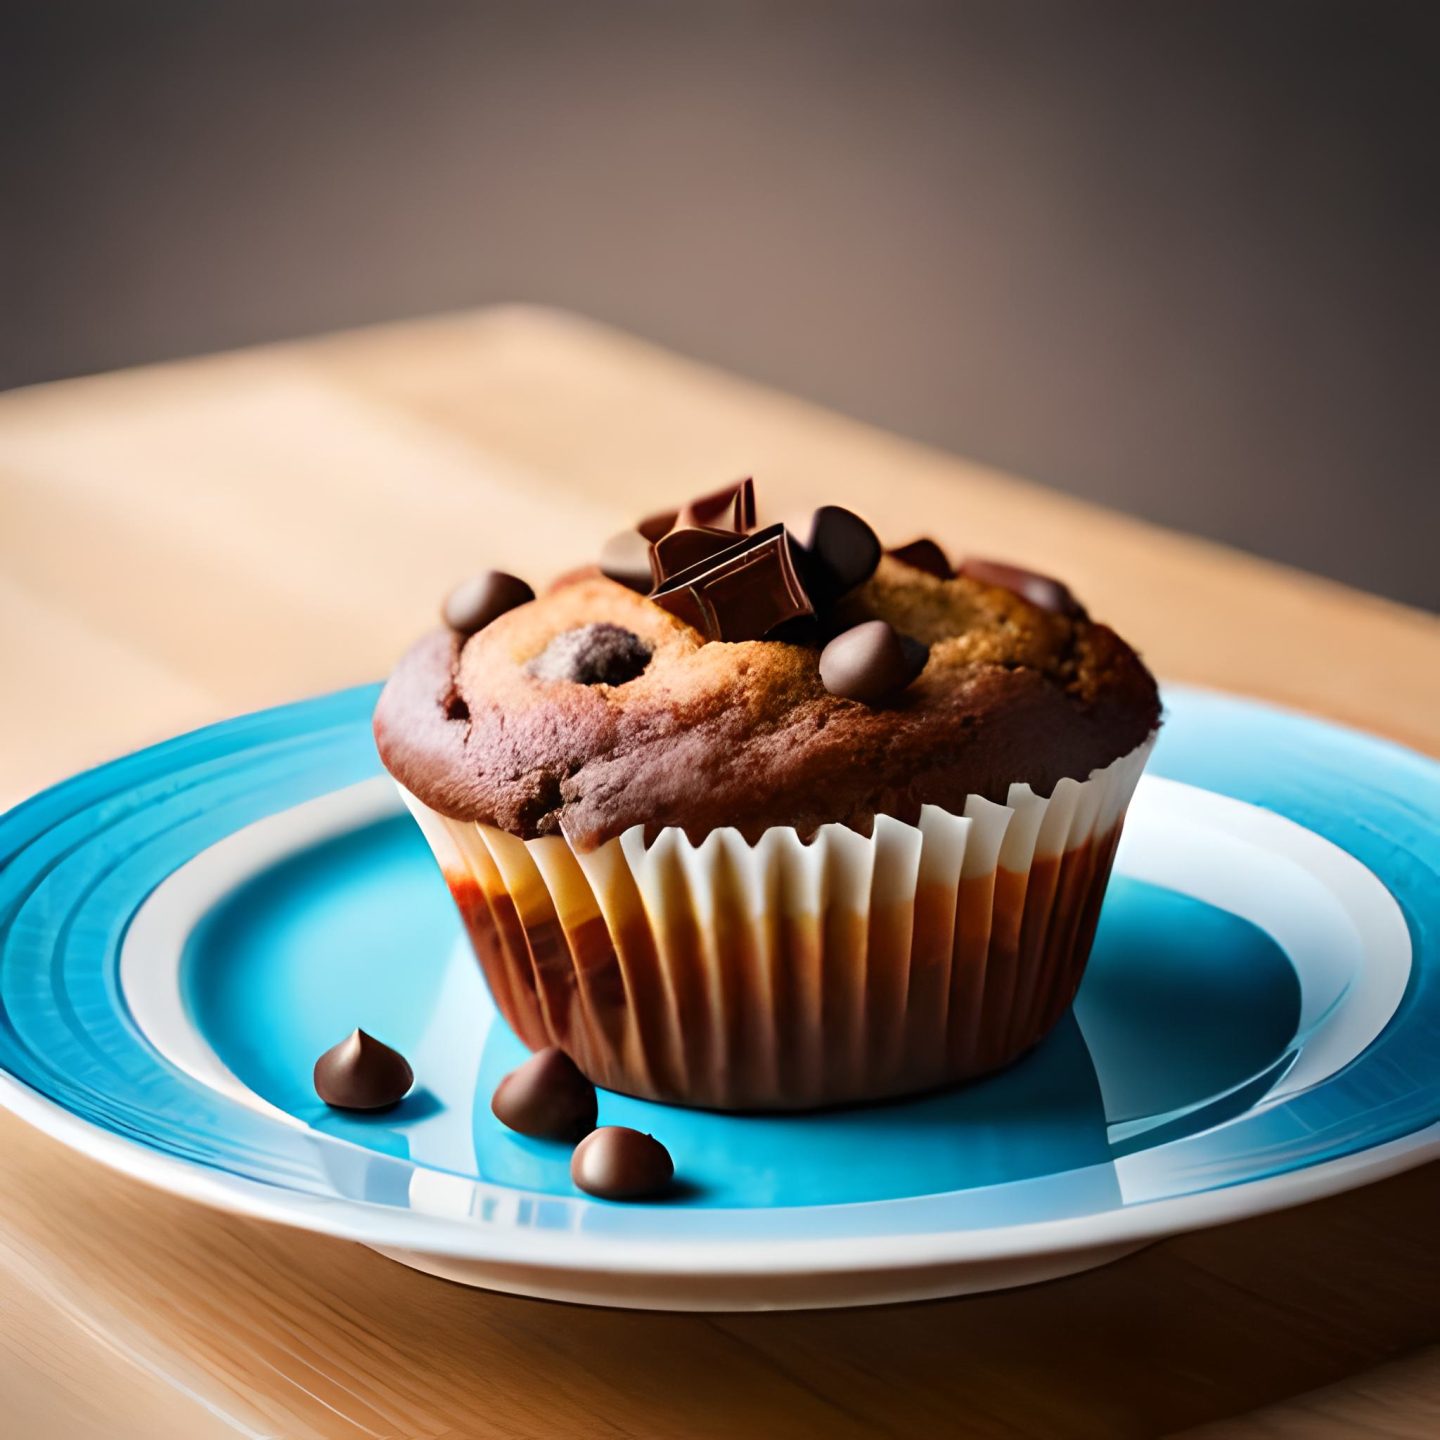  Chocolate Muffin Mixes, Chocolate Muffin Baking Tips, Chocolate Muffin Decorations, Chocolate Muffin Serving Suggestions, Chocolate Muffin Variations, Chocolate Muffin Toppings, 